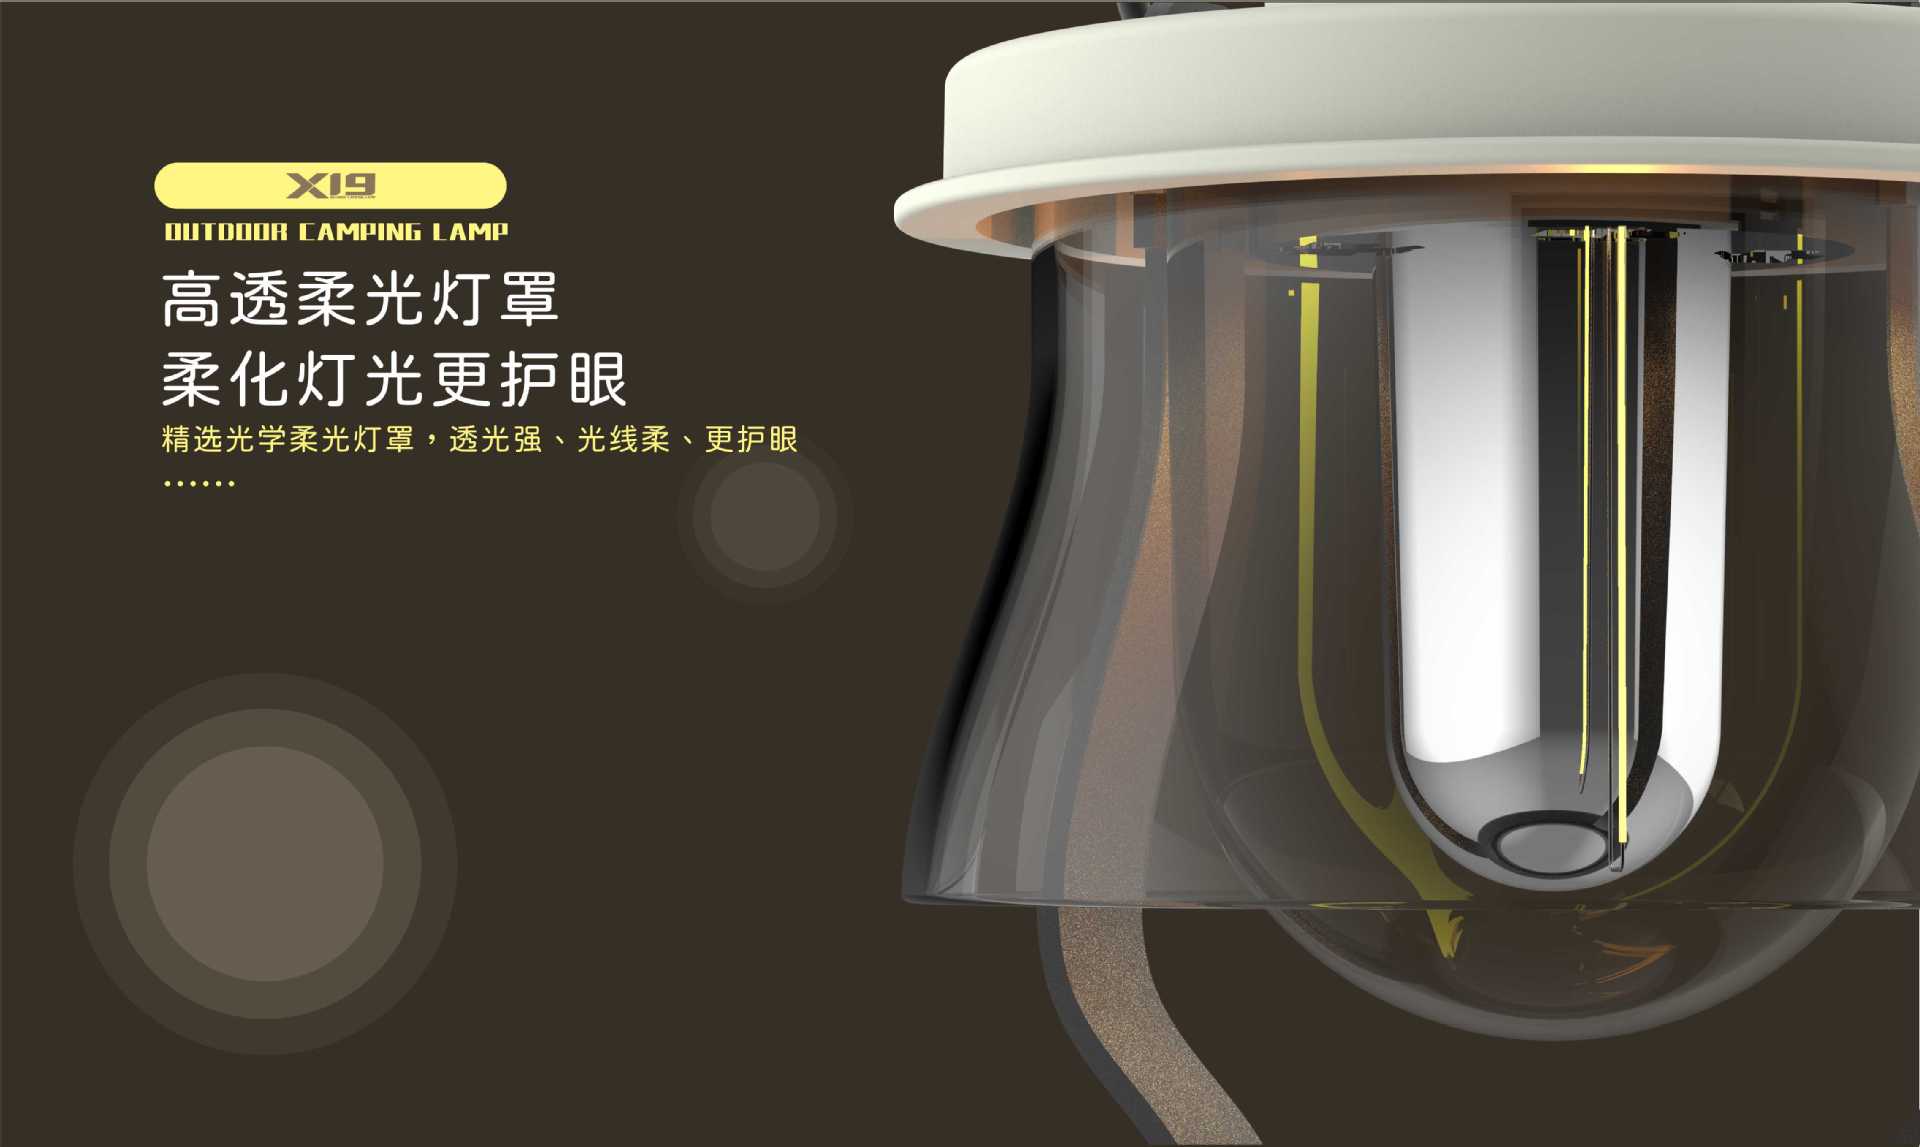 New Camping Light Charging Retro Lantern Amazon Led Portable Tent Light Multifunctional Outdoor Camping Light